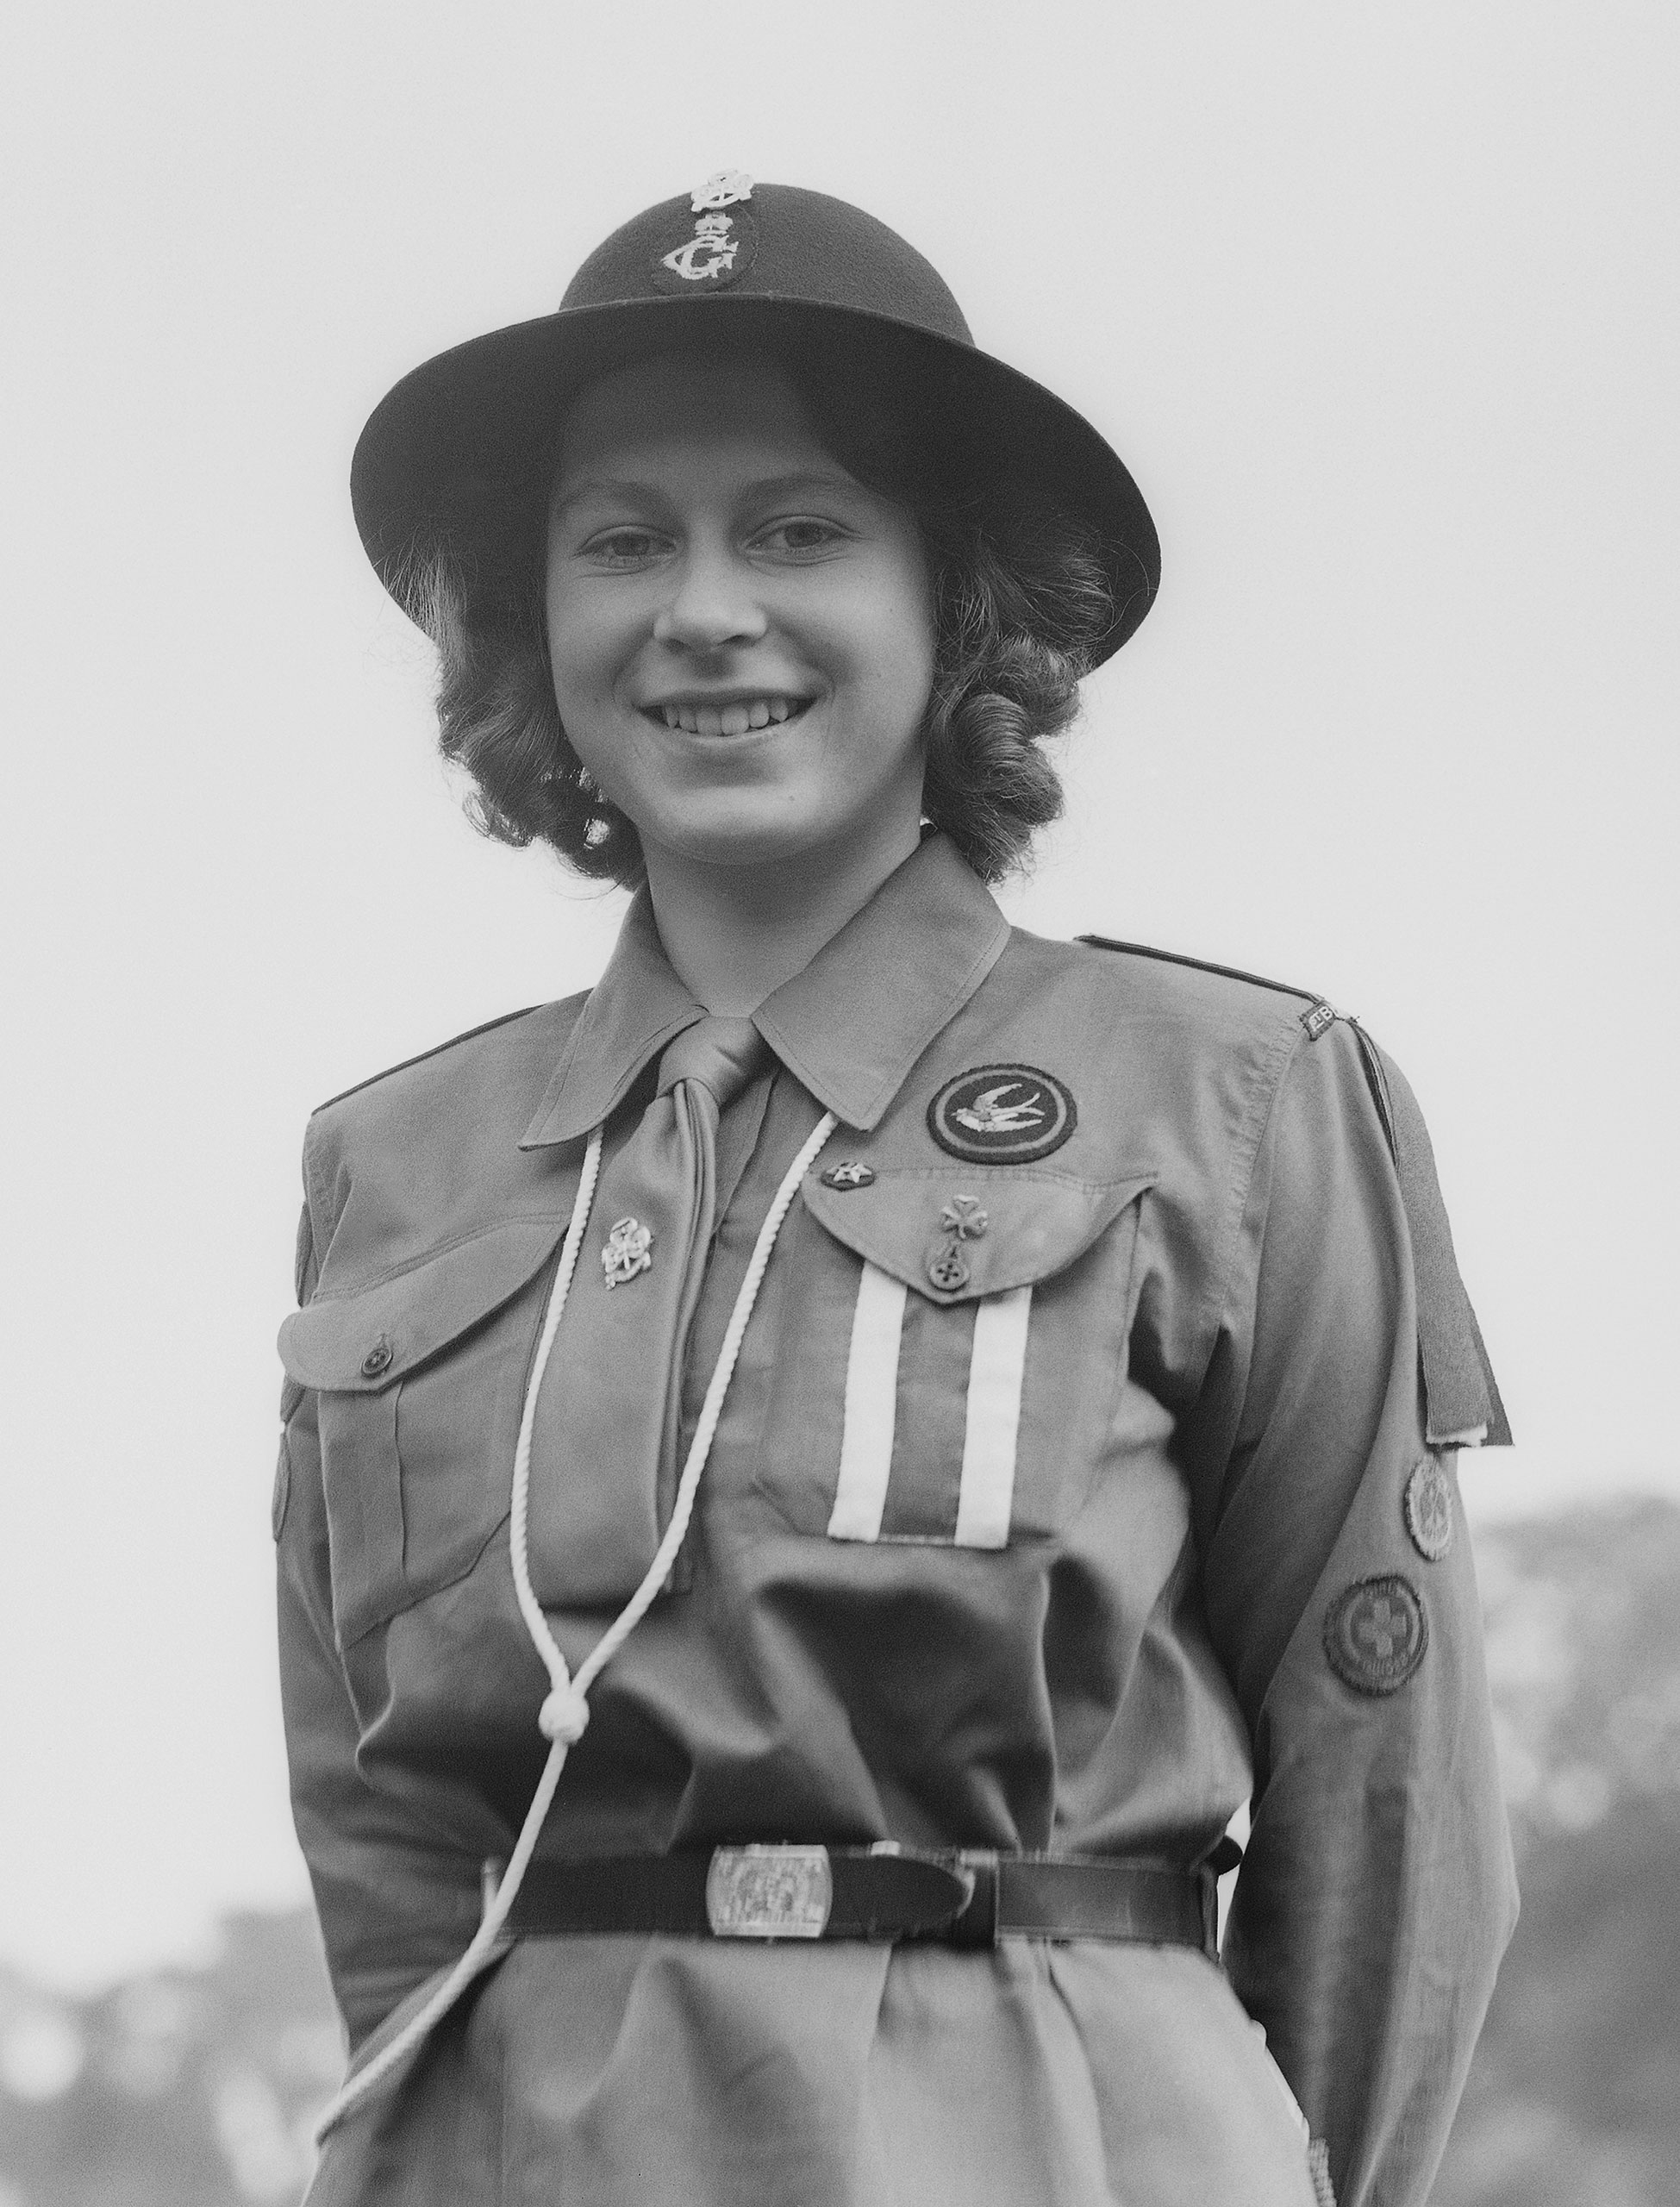 Princess Elizabeth poses in her girl guide uniform in Frogmore, Windsor, England on April 11, 1942.